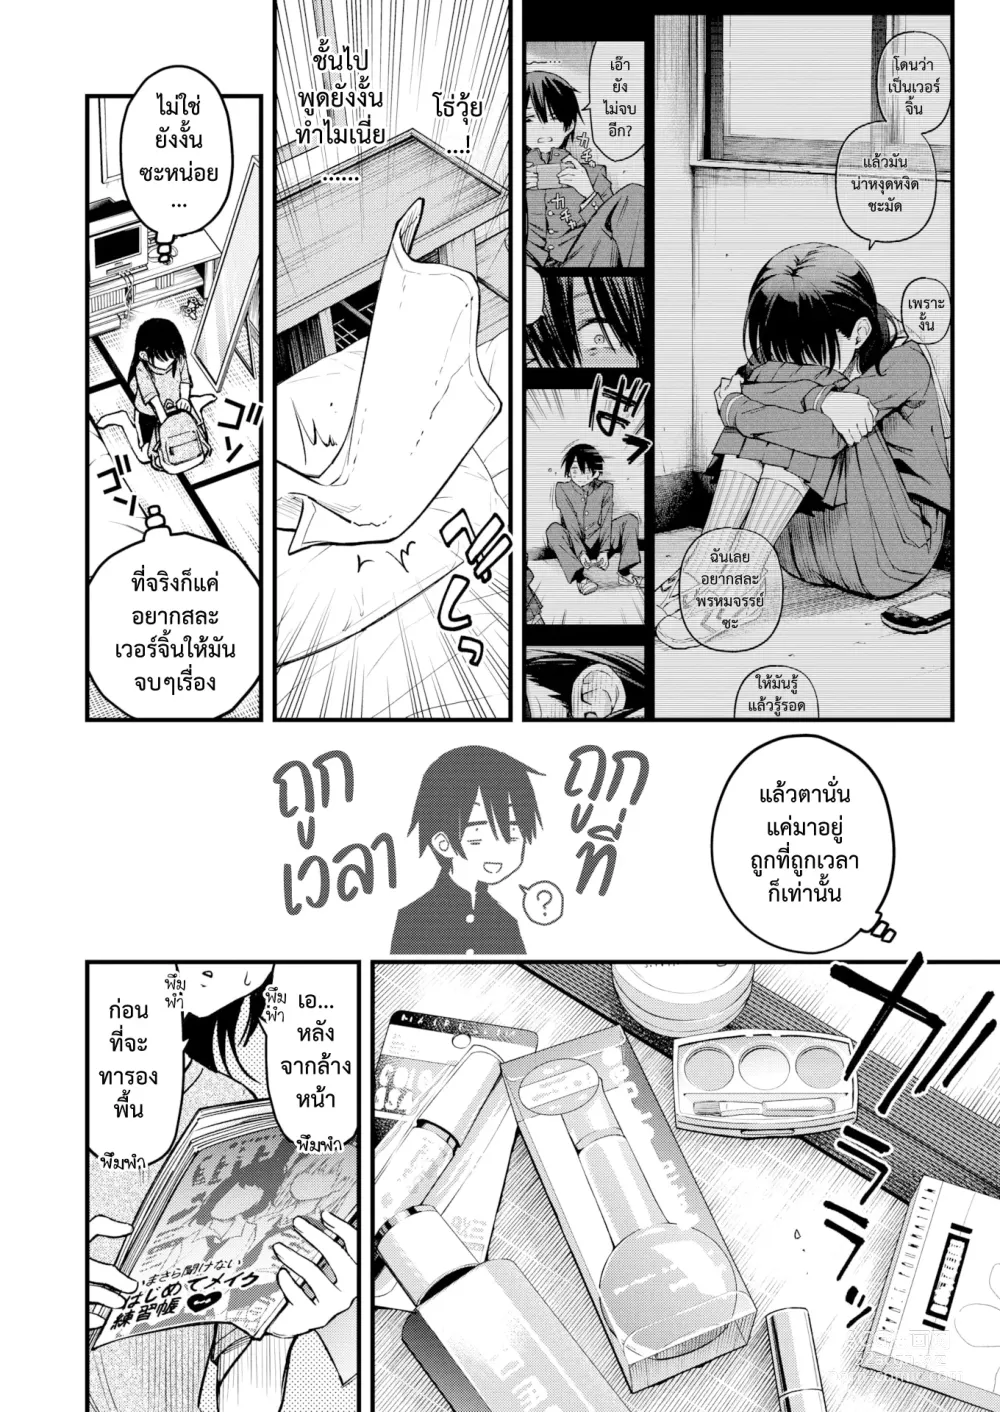 Page 5 of manga เพลงรักของคนหม่น #2 -บทอามาโนะ ยุยกะ-